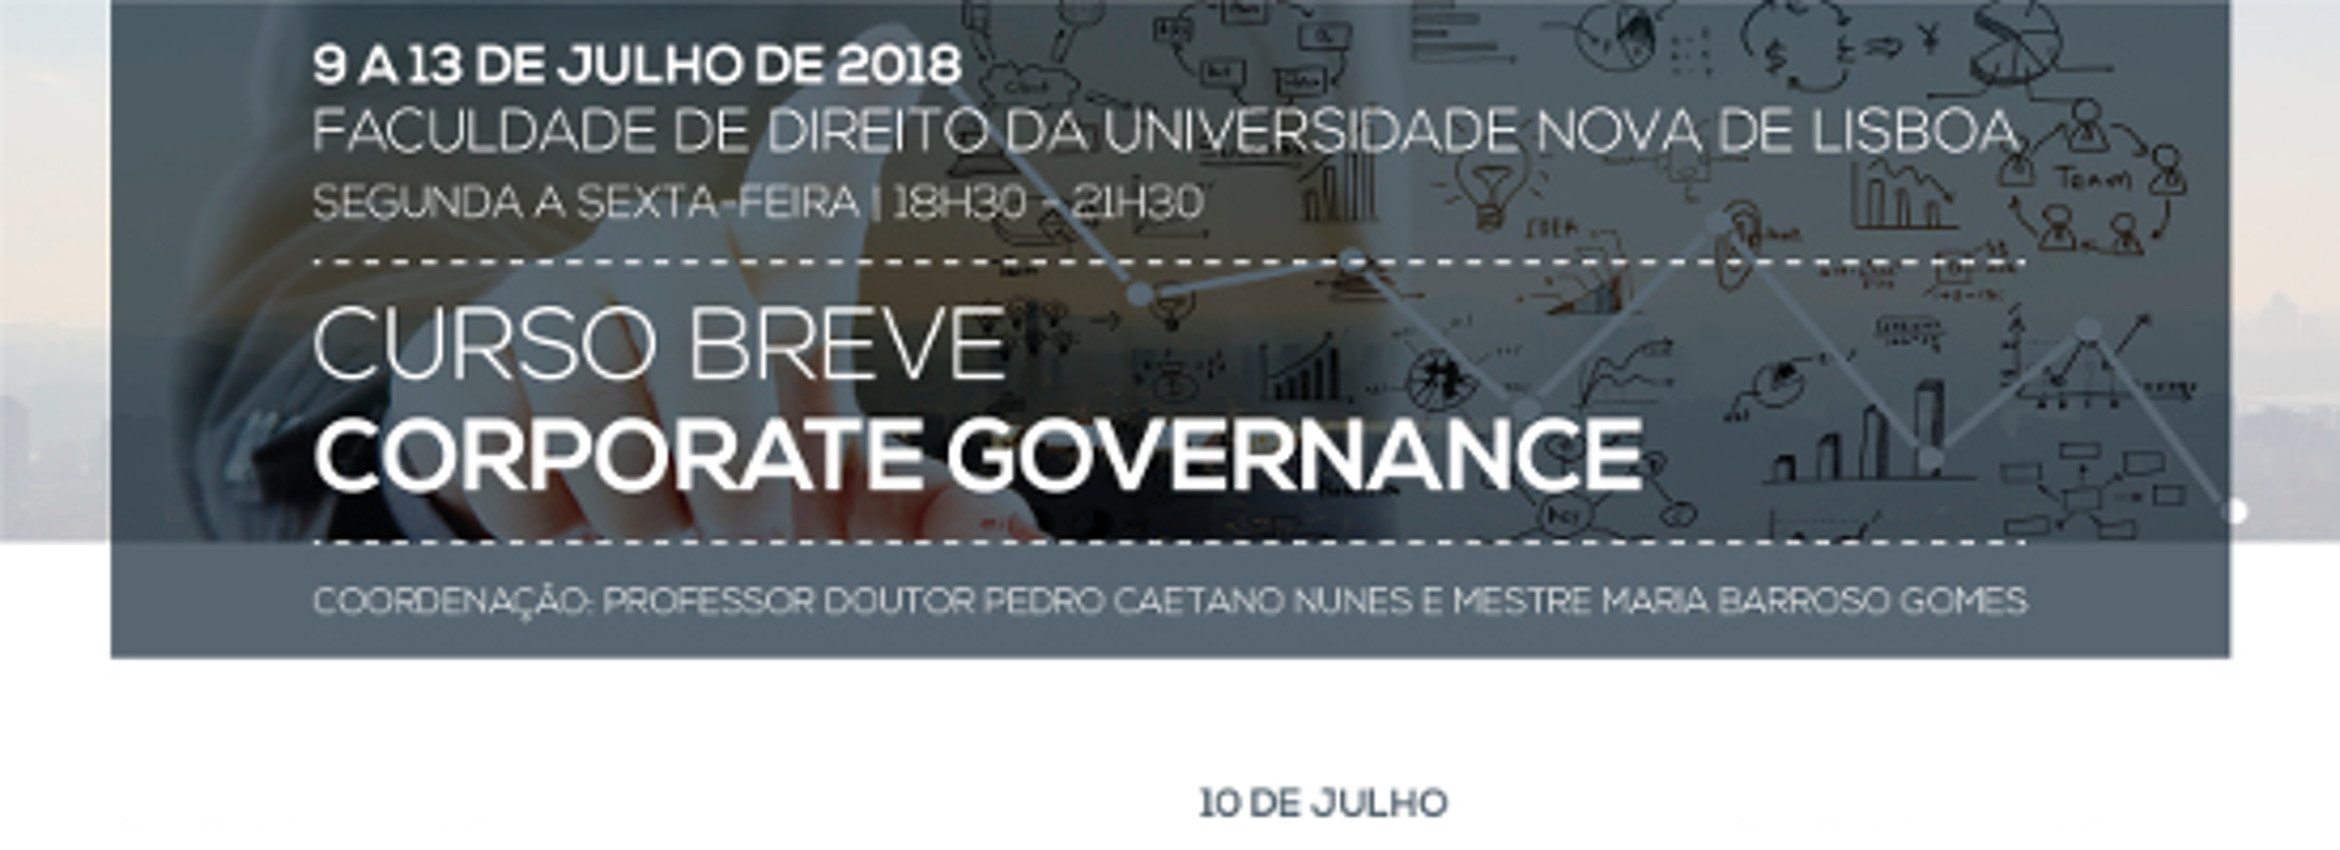 Corporate Governance - Curso Breve